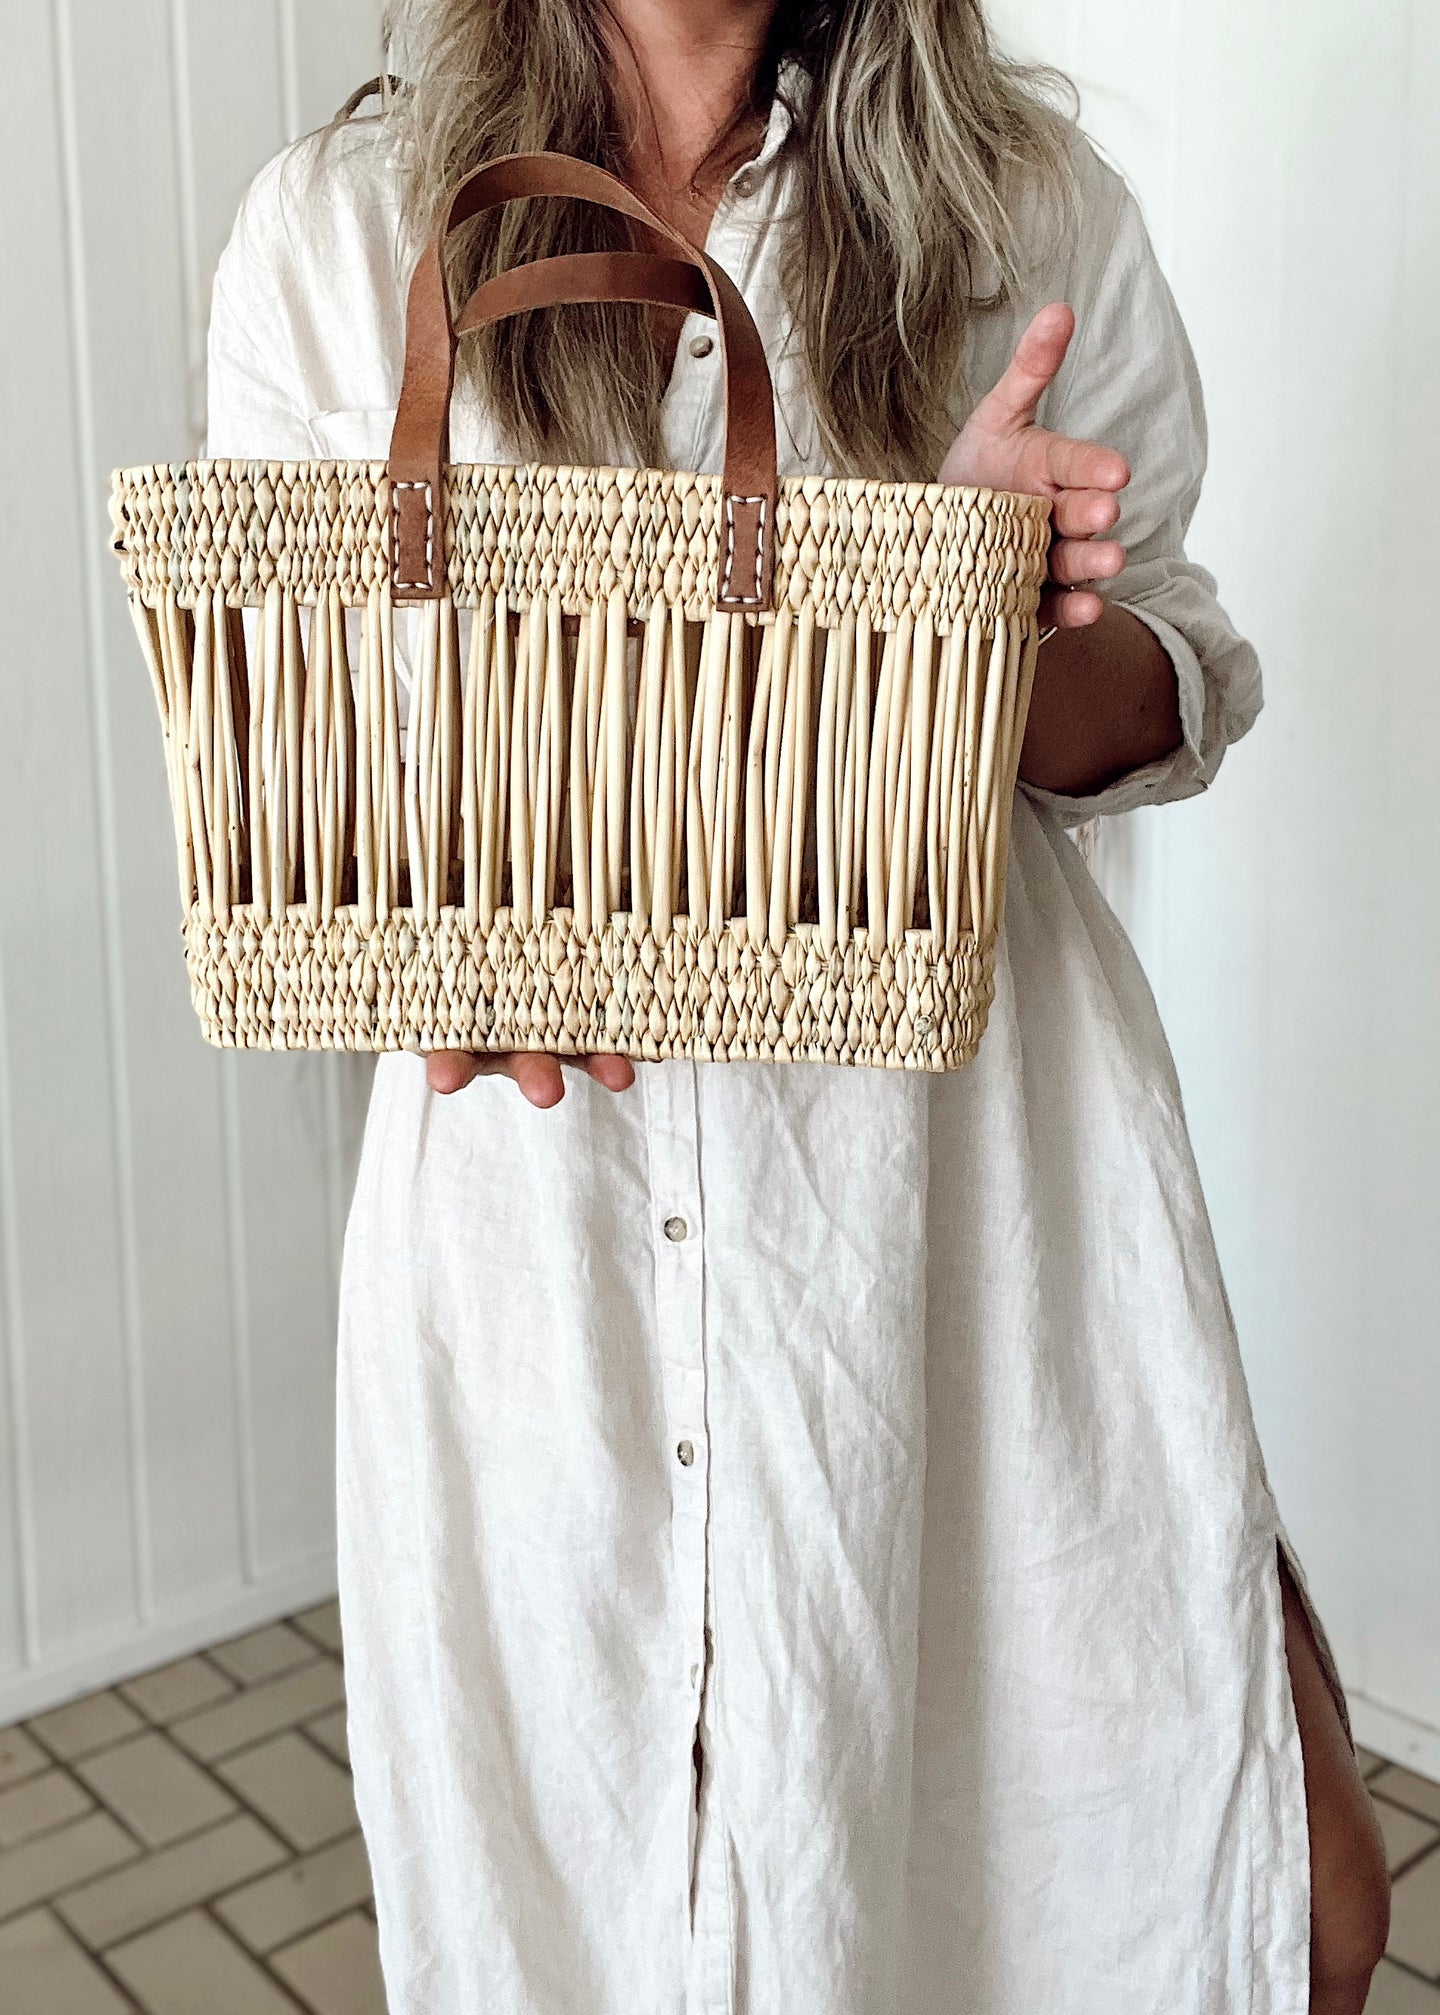 Ribcage Basket - small or medium